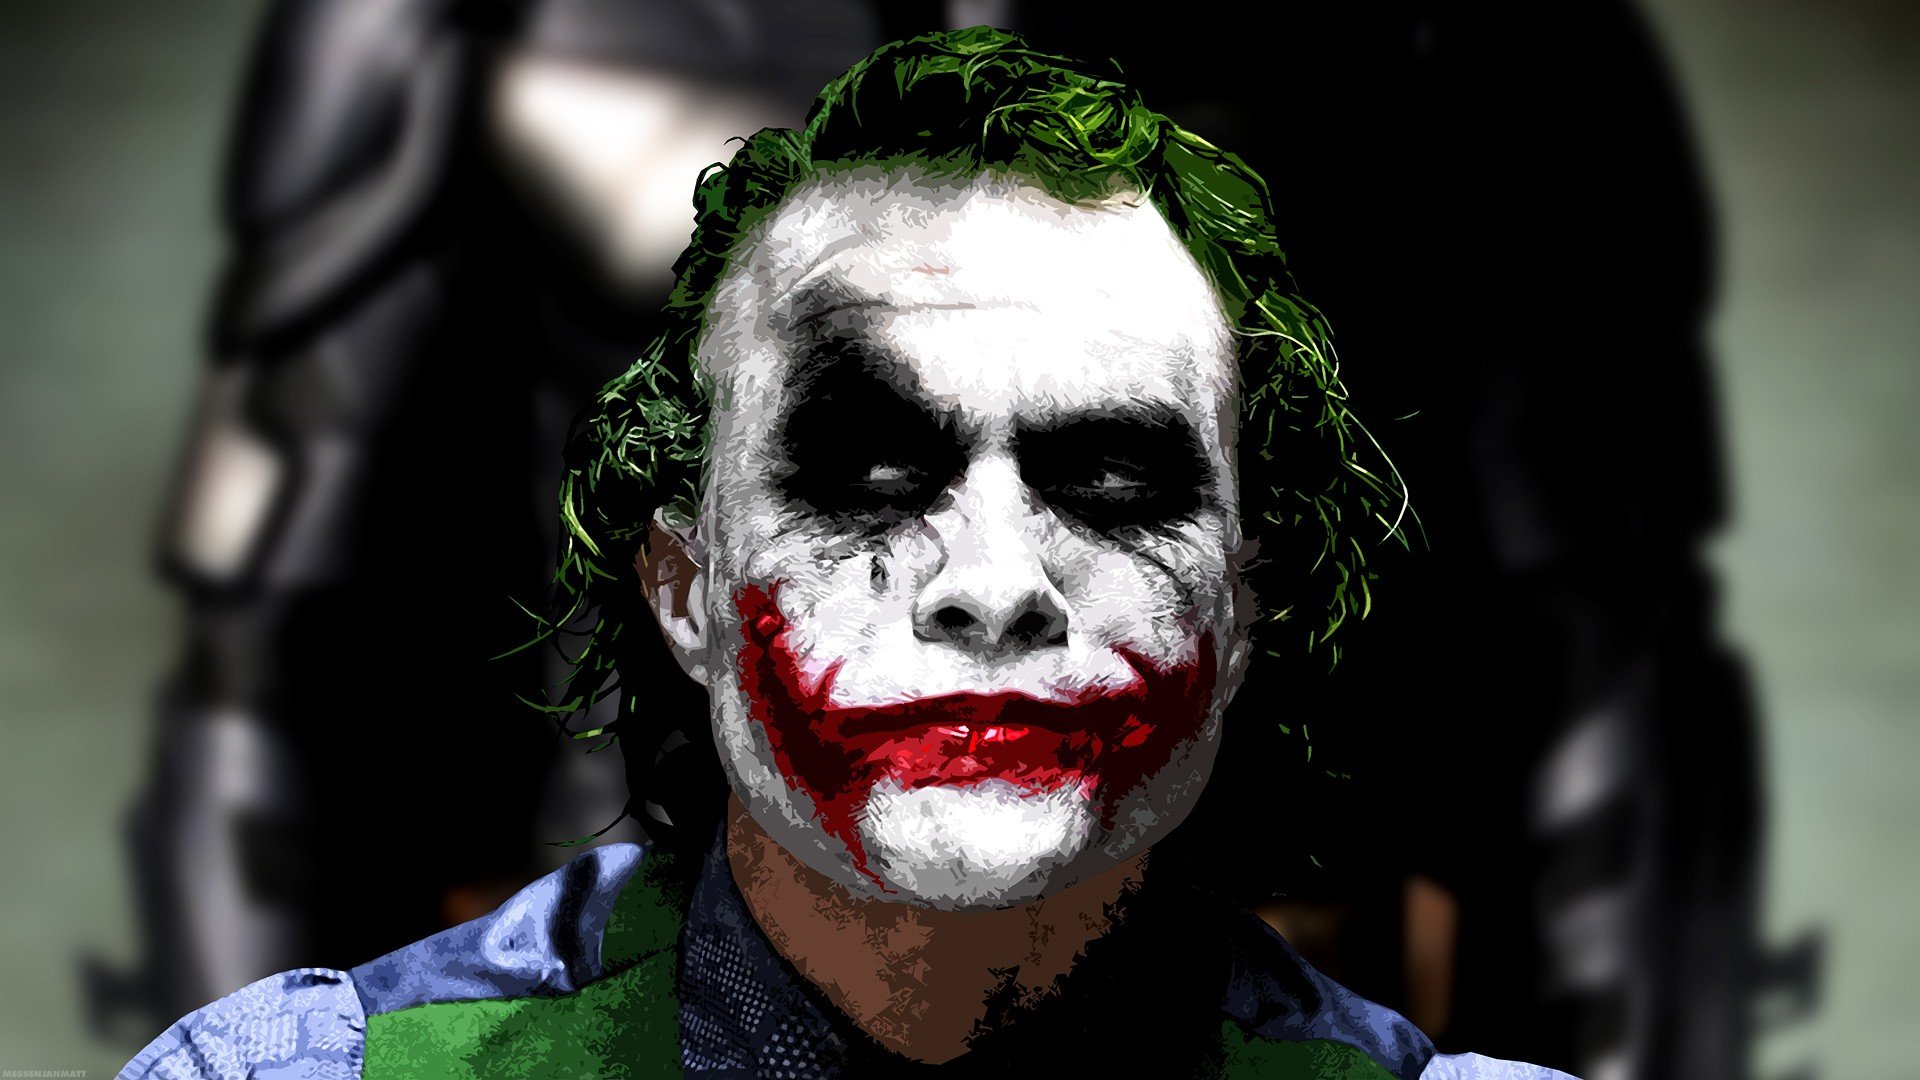 74+] Heath Ledger Joker Wallpaper - WallpaperSafari